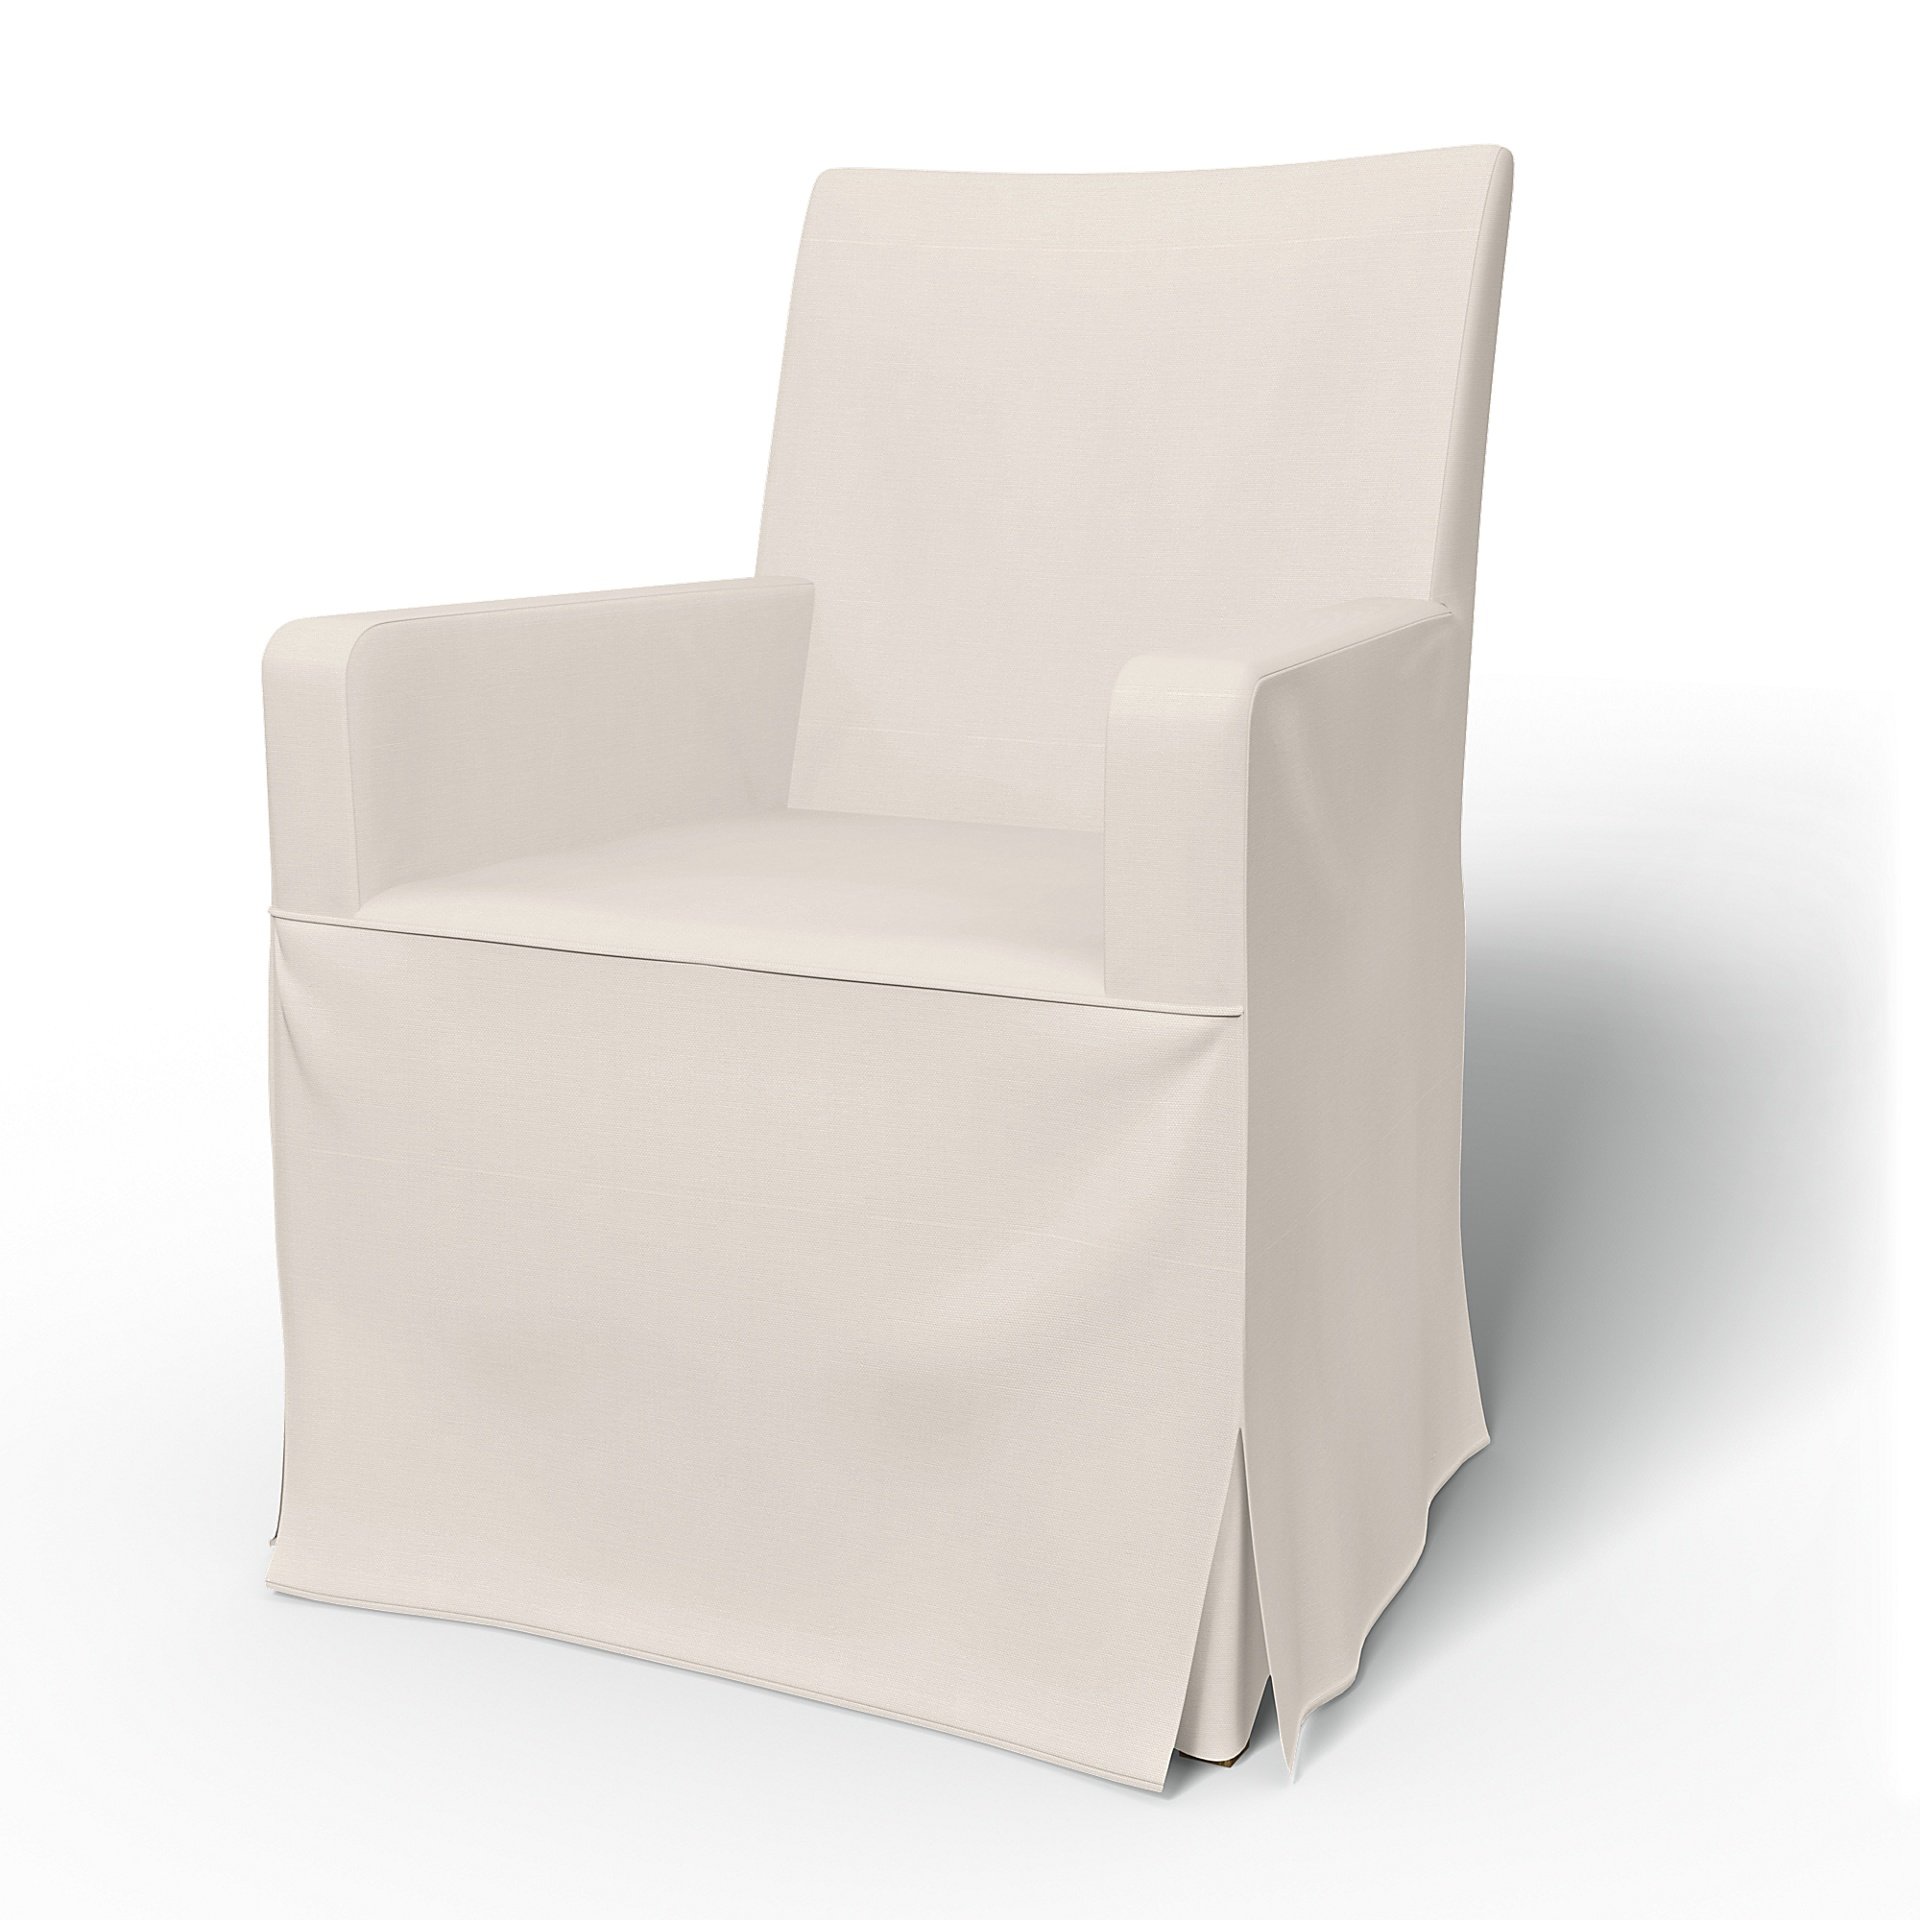 IKEA - Henriksdal, Chair cover w/ armrests, long skirt box pleat, Soft White, Cotton - Bemz